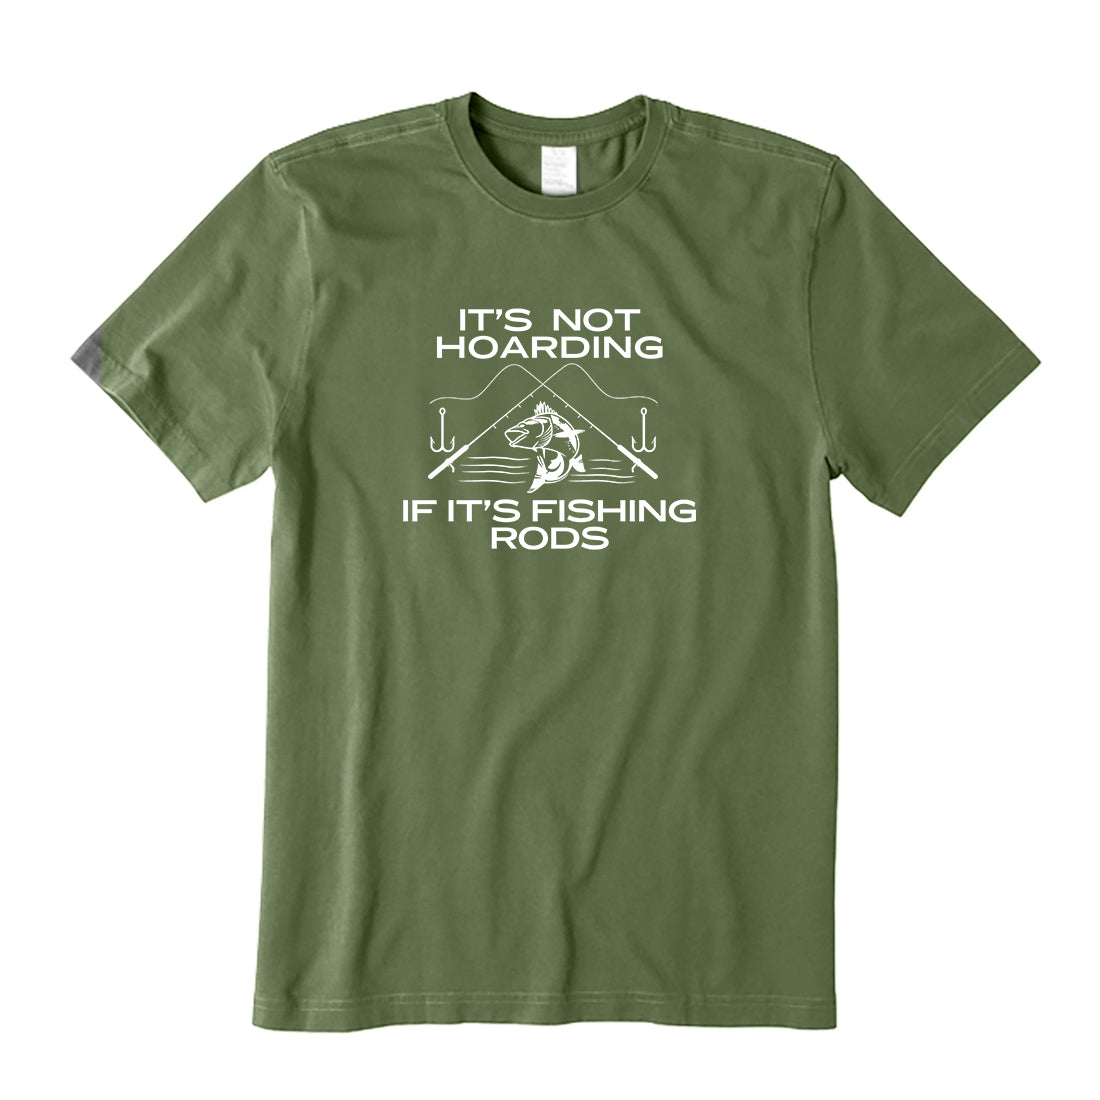 It’s not hoarding if it’s fishing rods T-Shirt